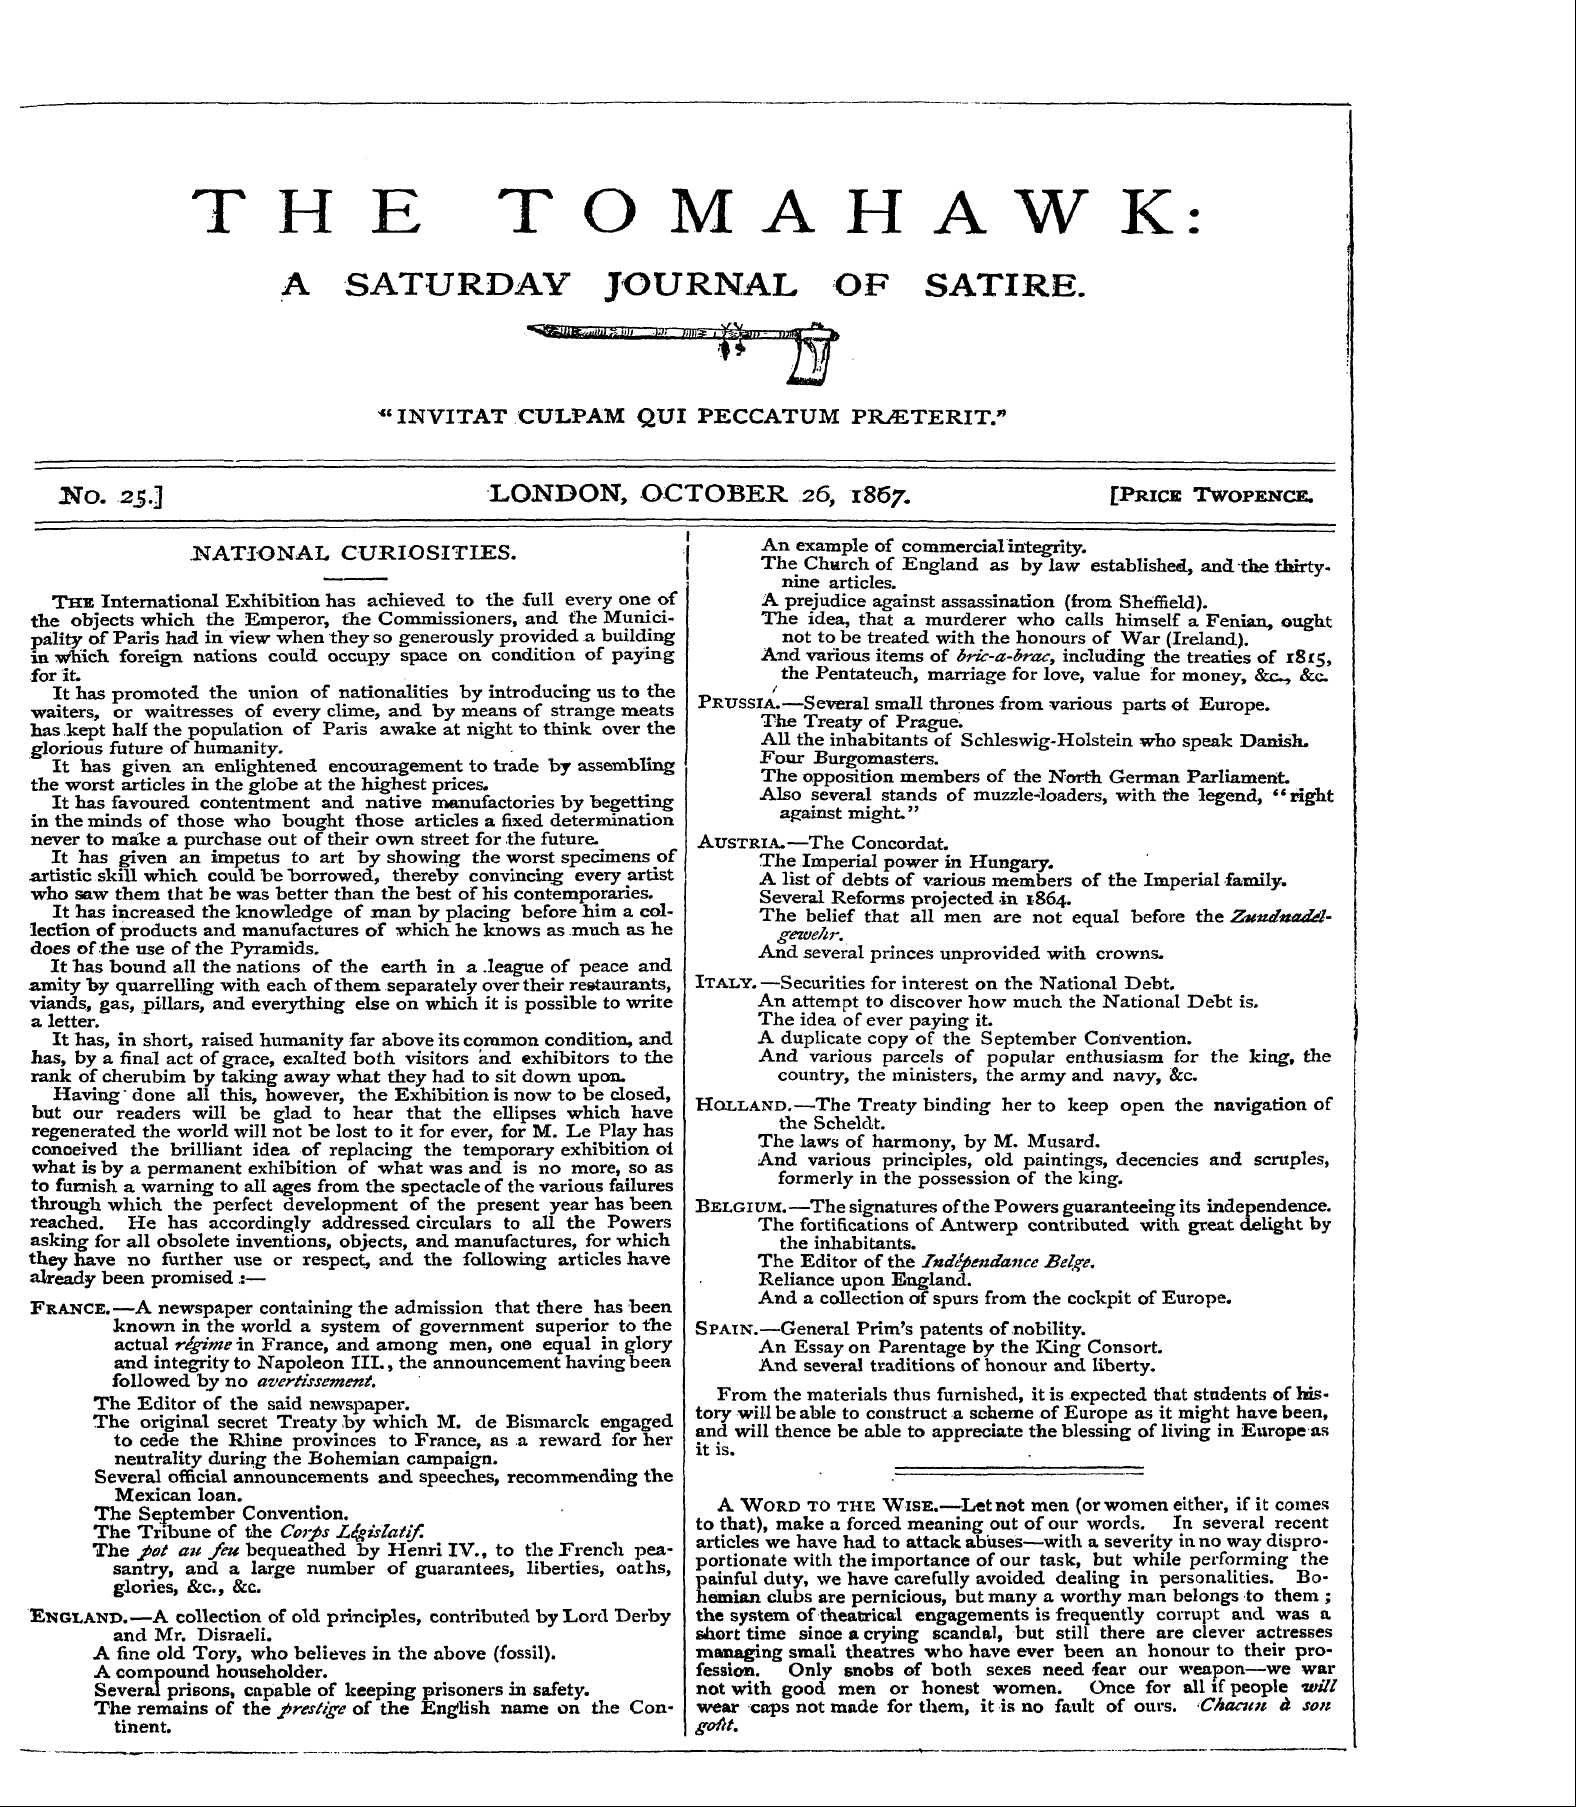 Tomahawk (1867-1870): jS F Y, 1st edition: 1